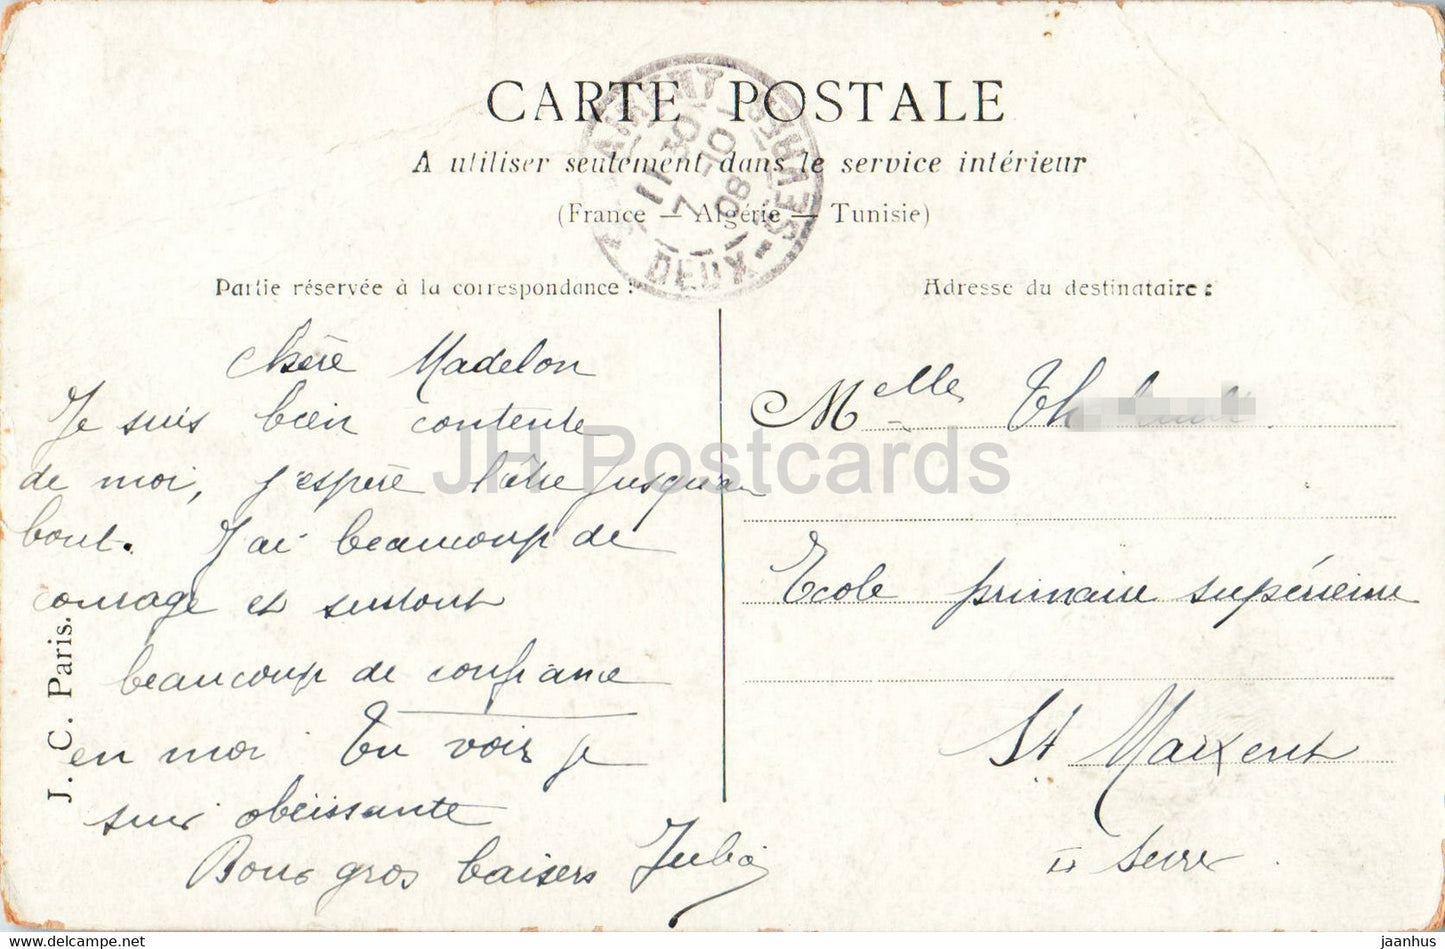 Lili et son Chien - chien - animal - carte postale ancienne - 1908 - France - occasion